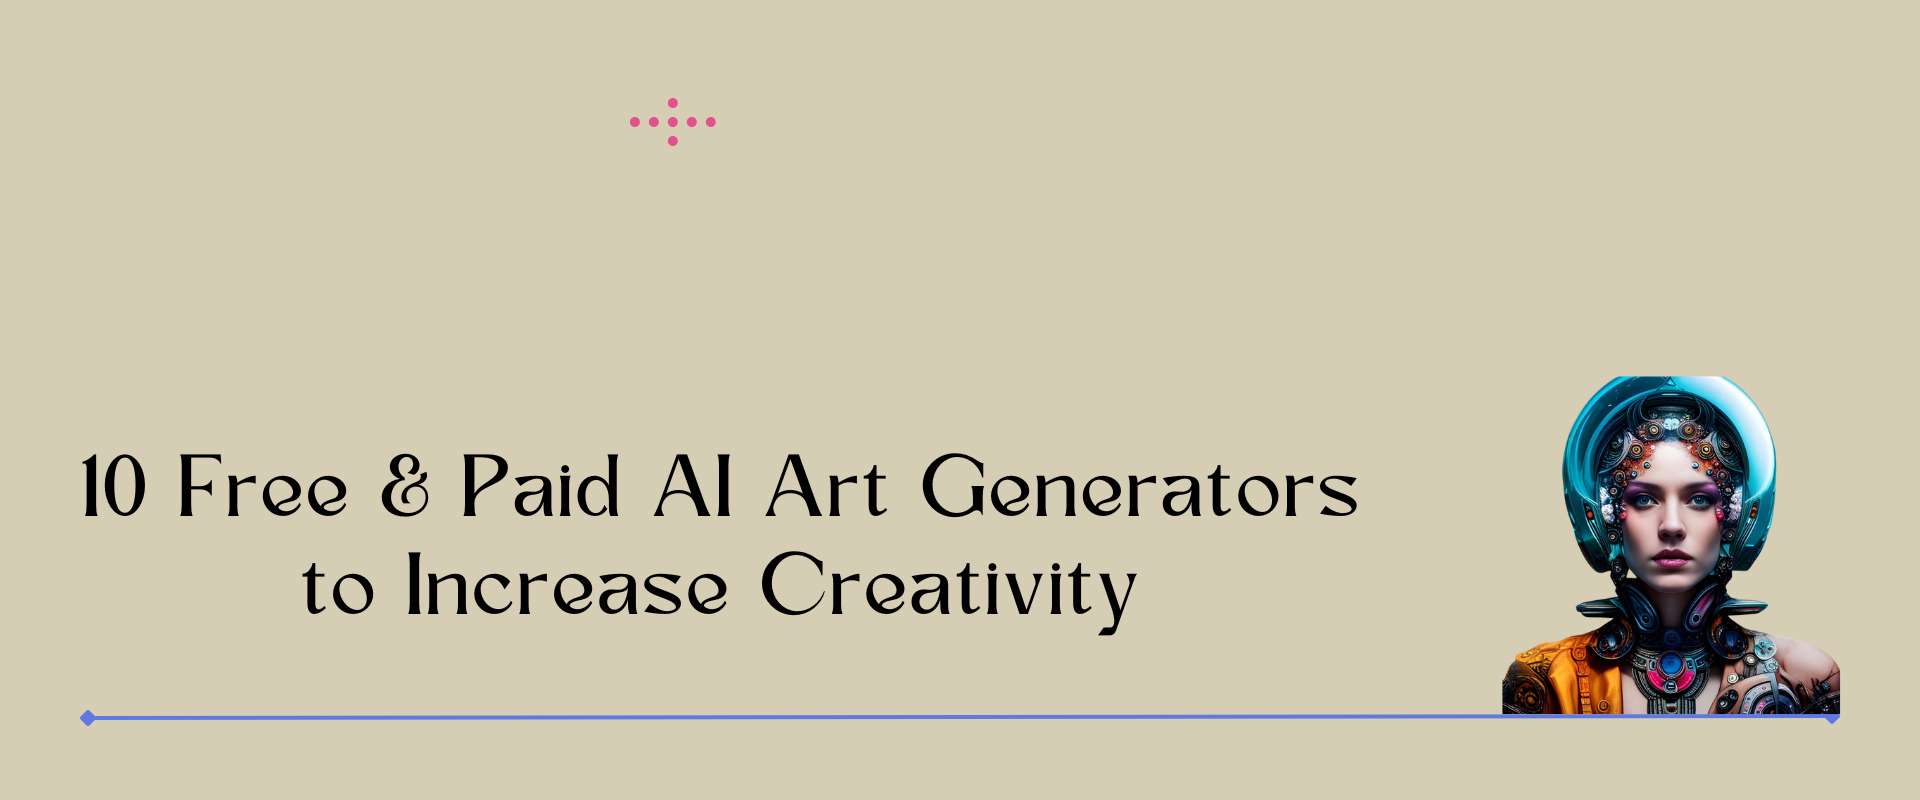 10 Free & Paid AI Art Generators to Increase Creativity